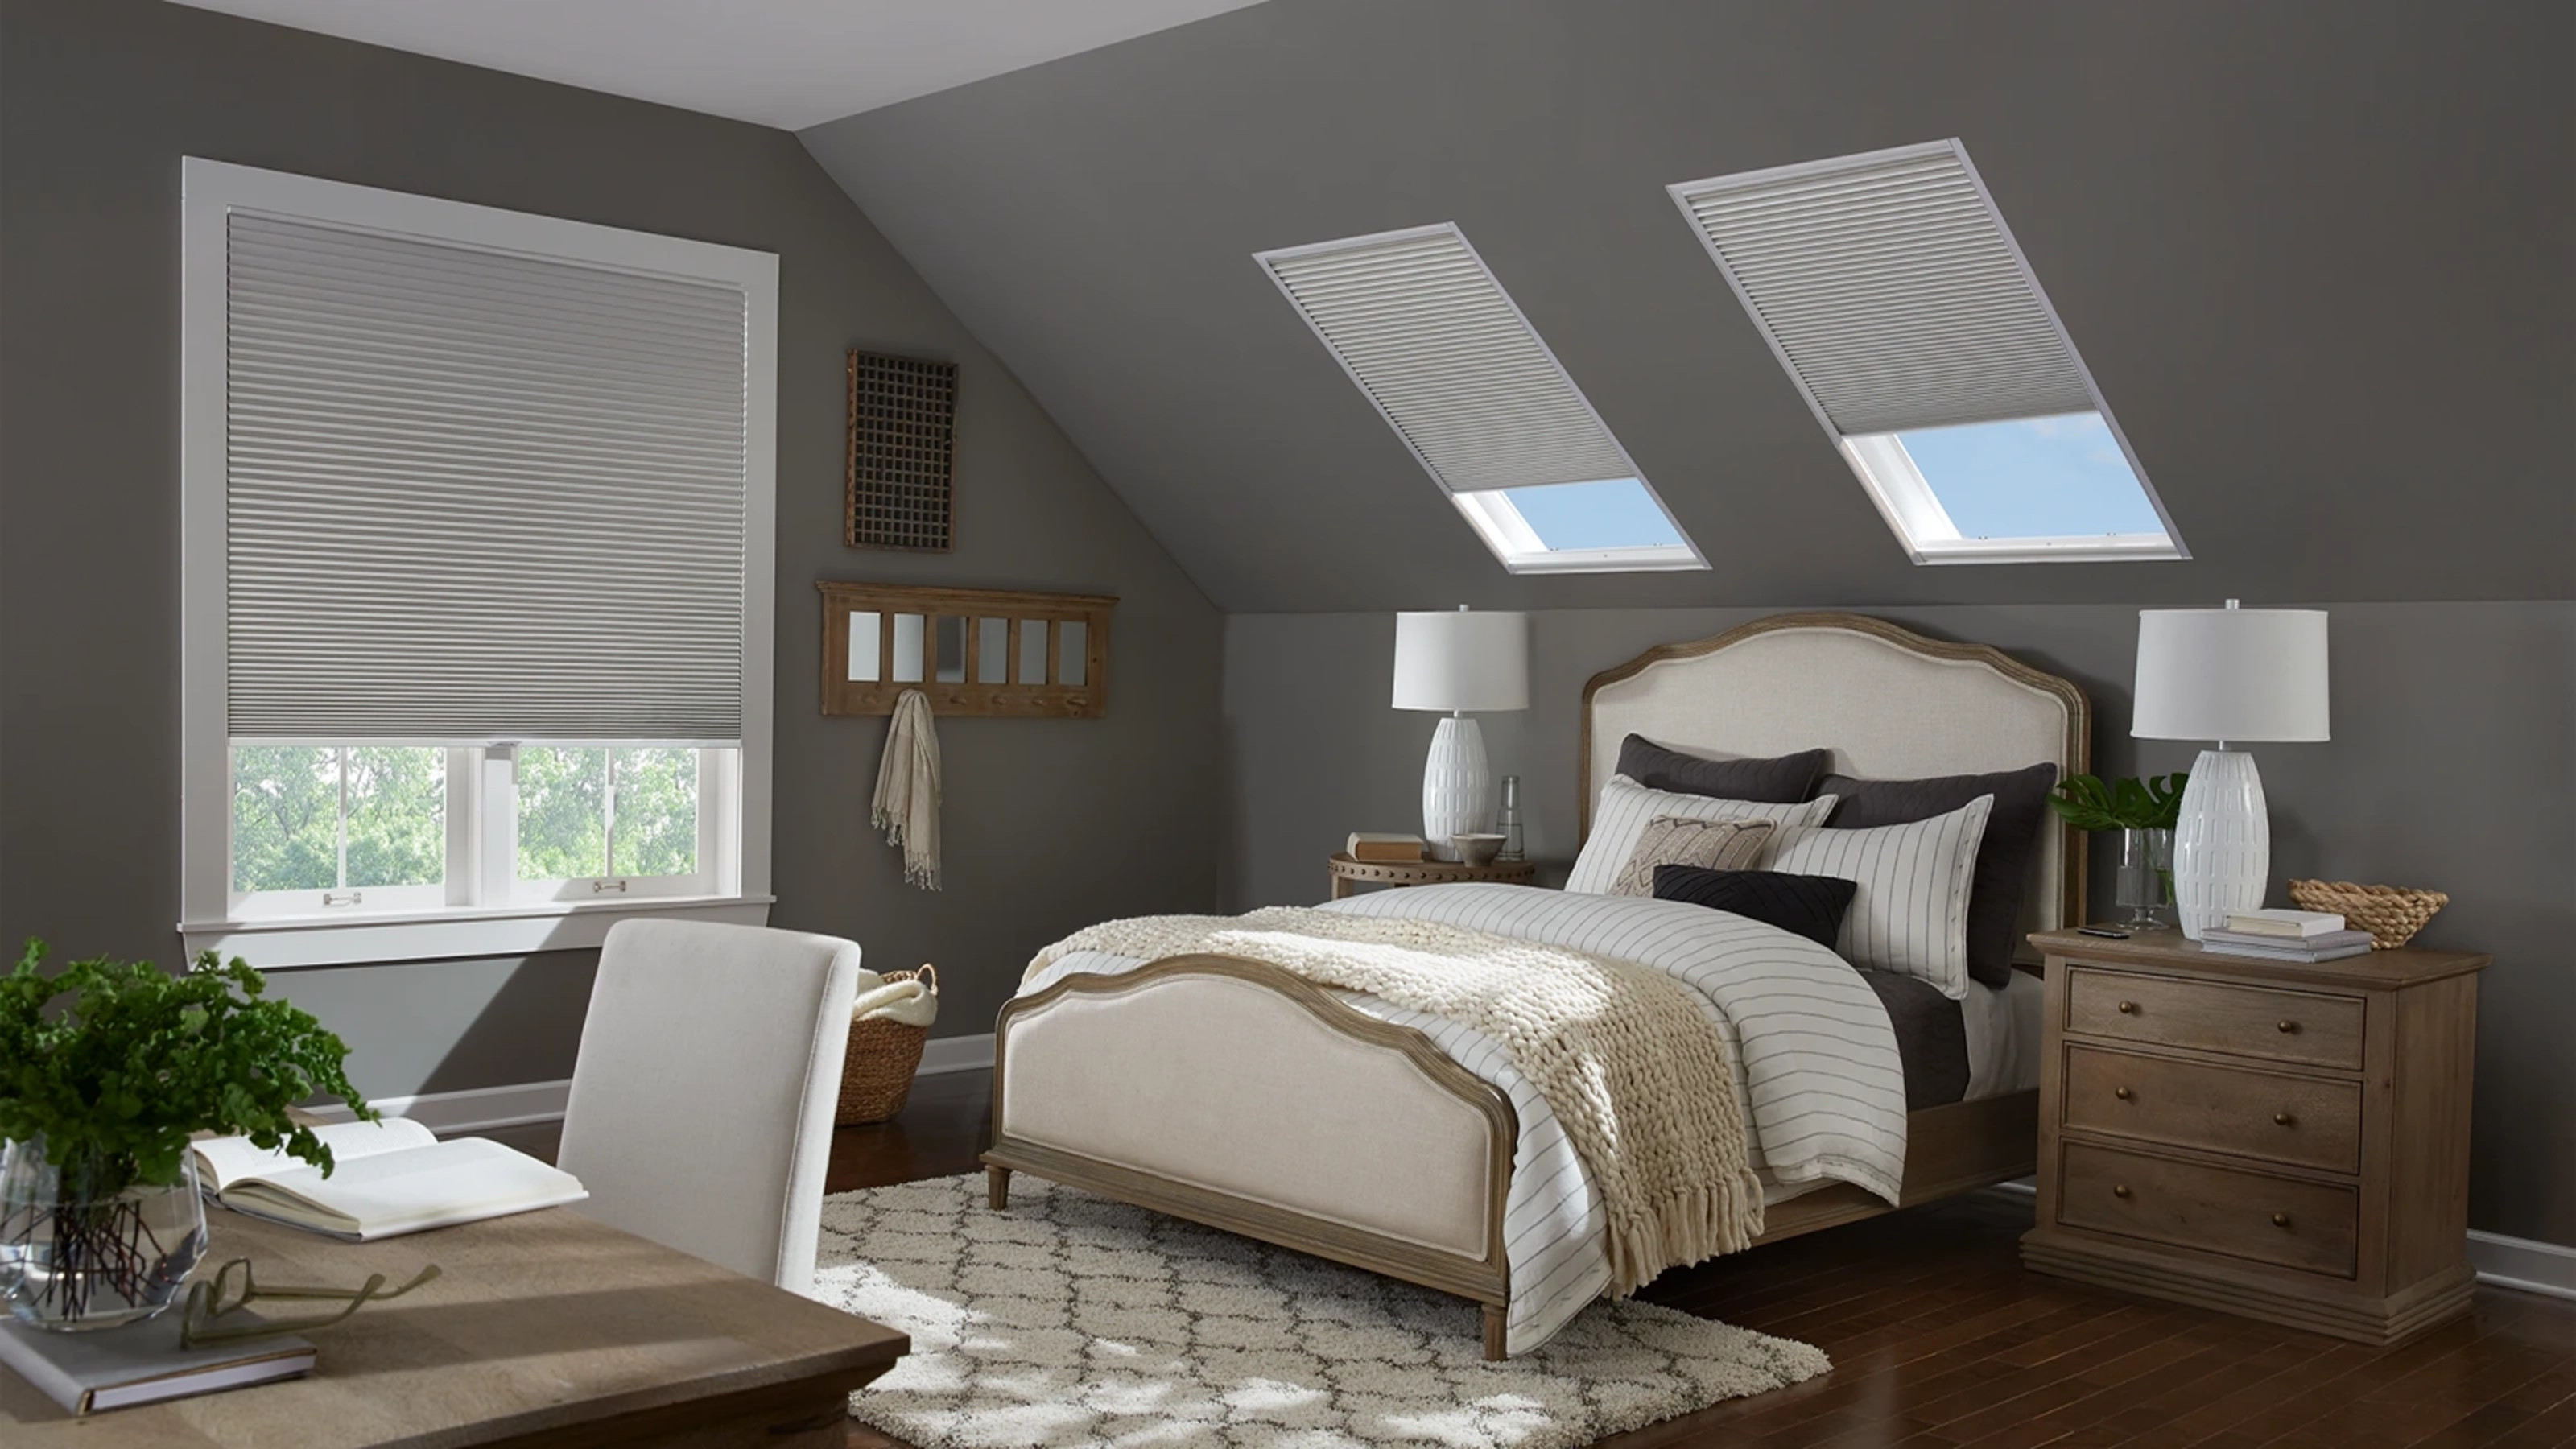 Honeycomb skylight shades in a cozy bedroom.